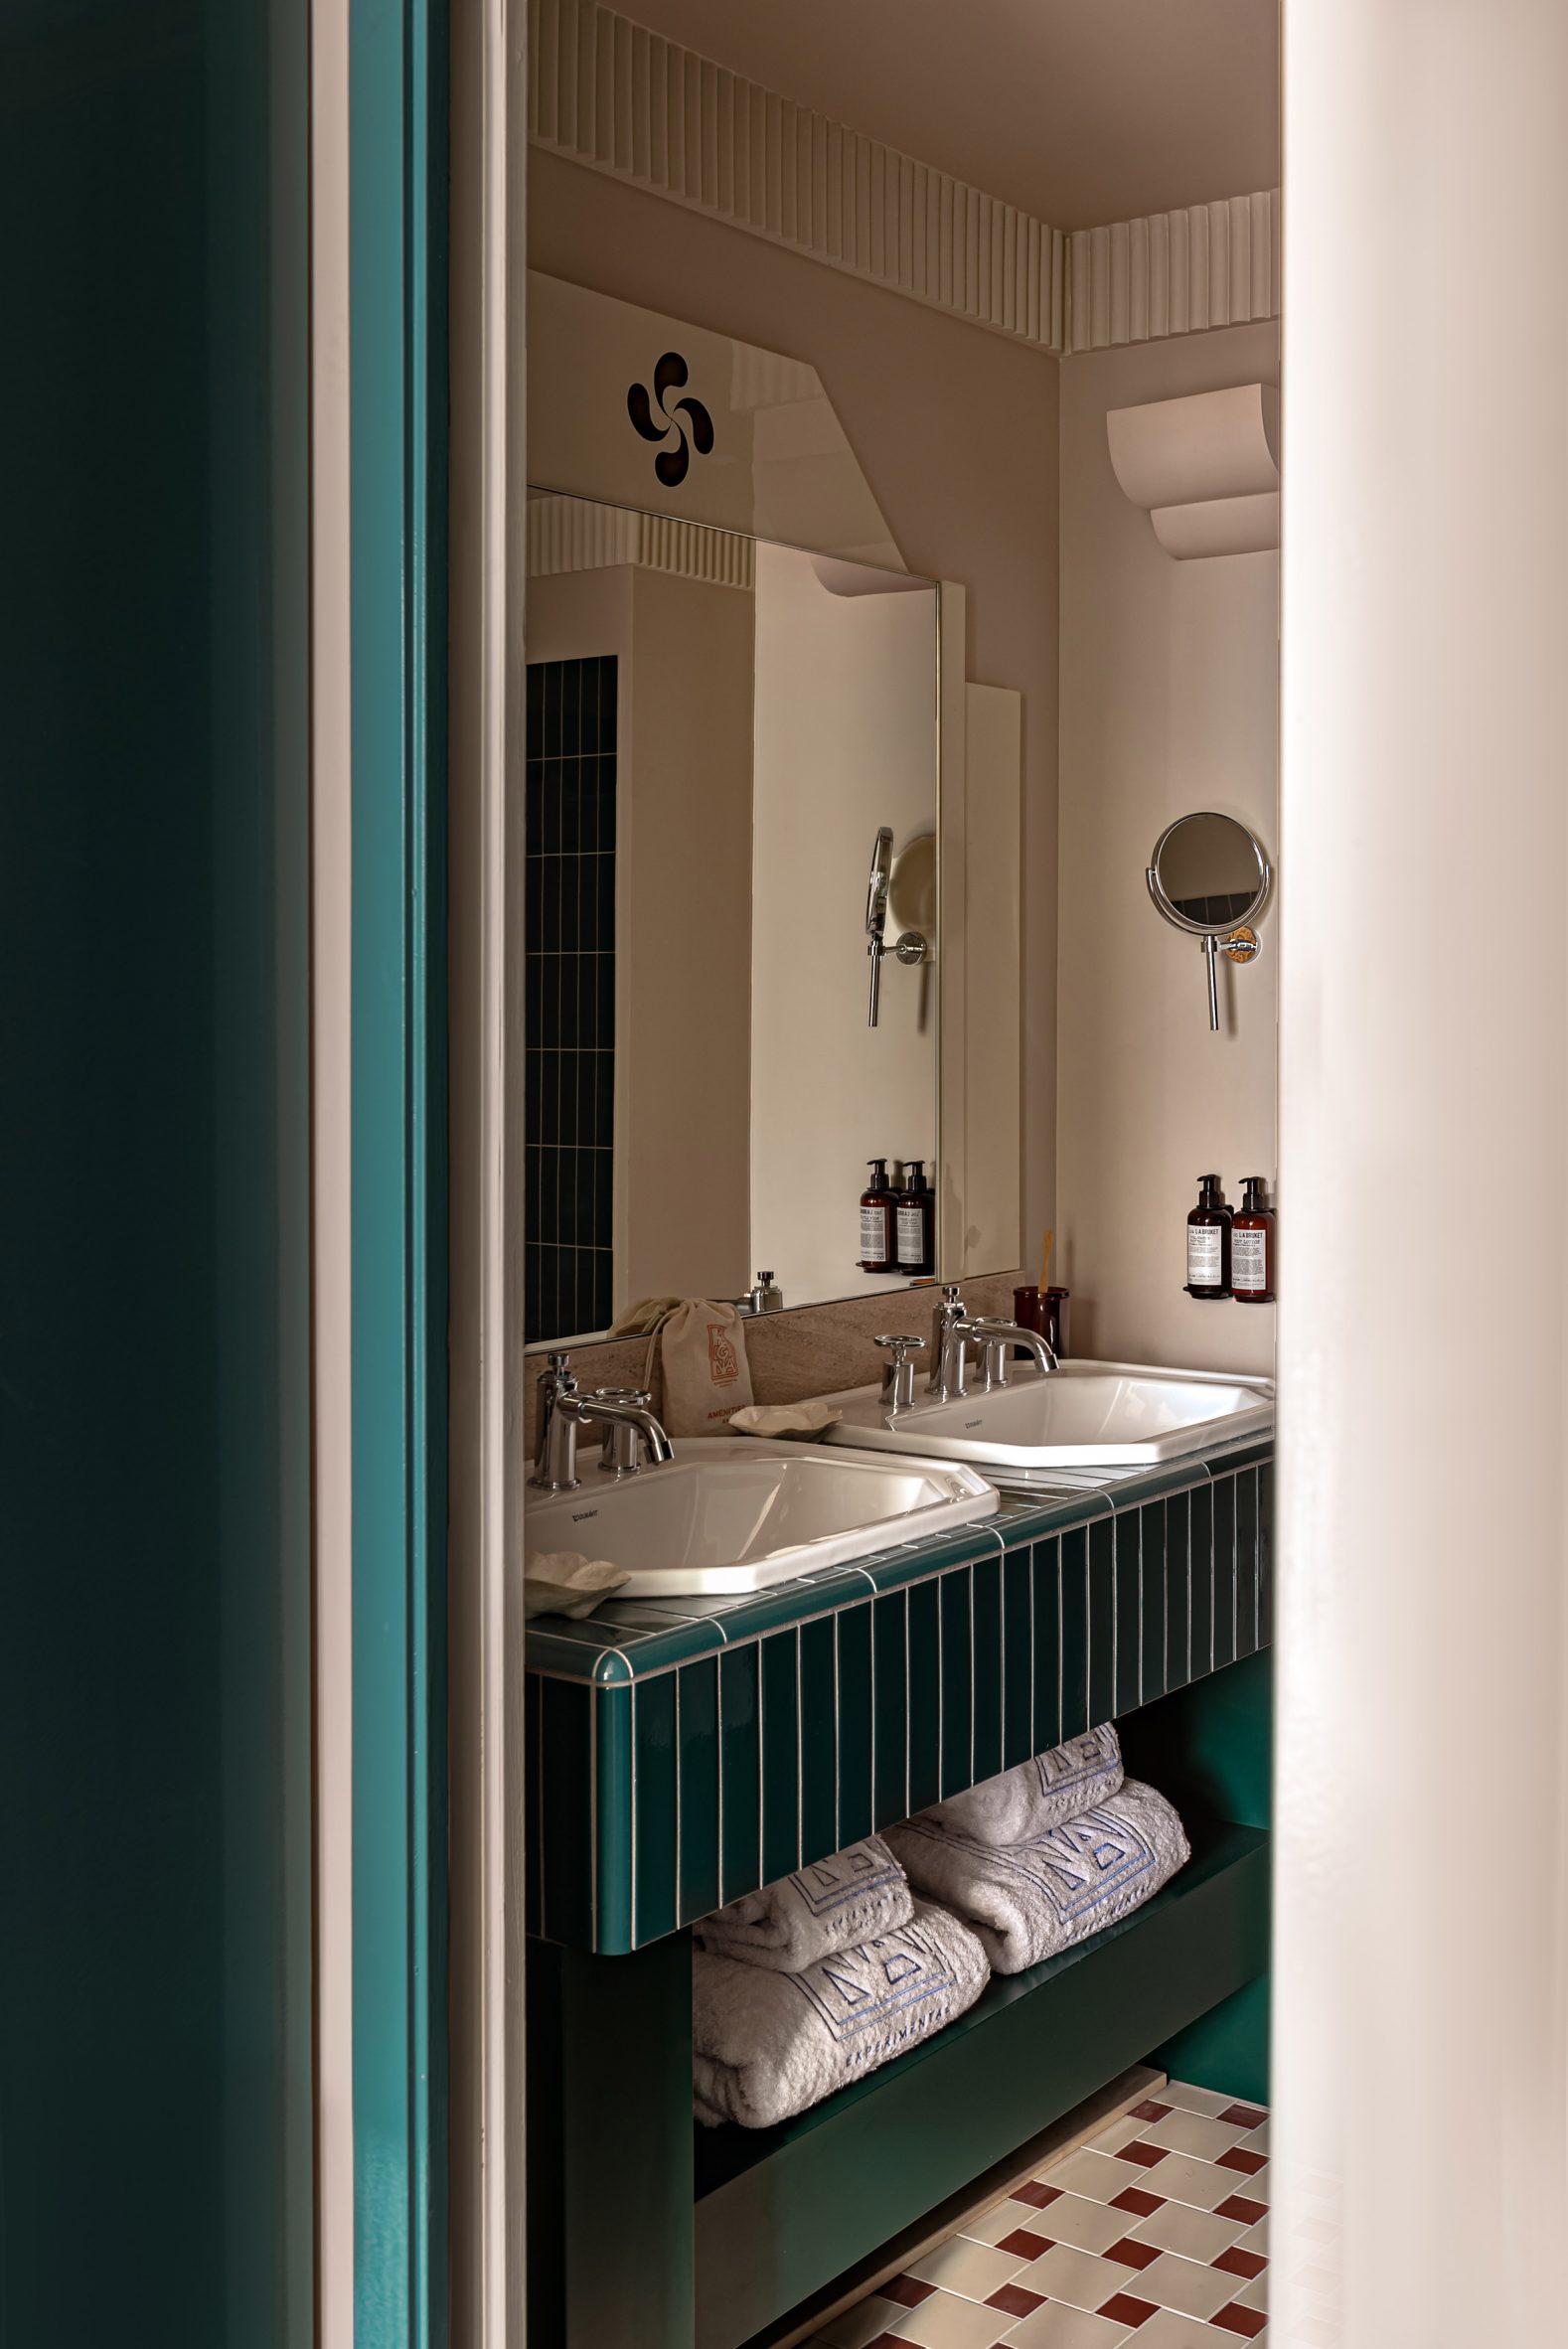 Bathroom with teal-coloured tiles